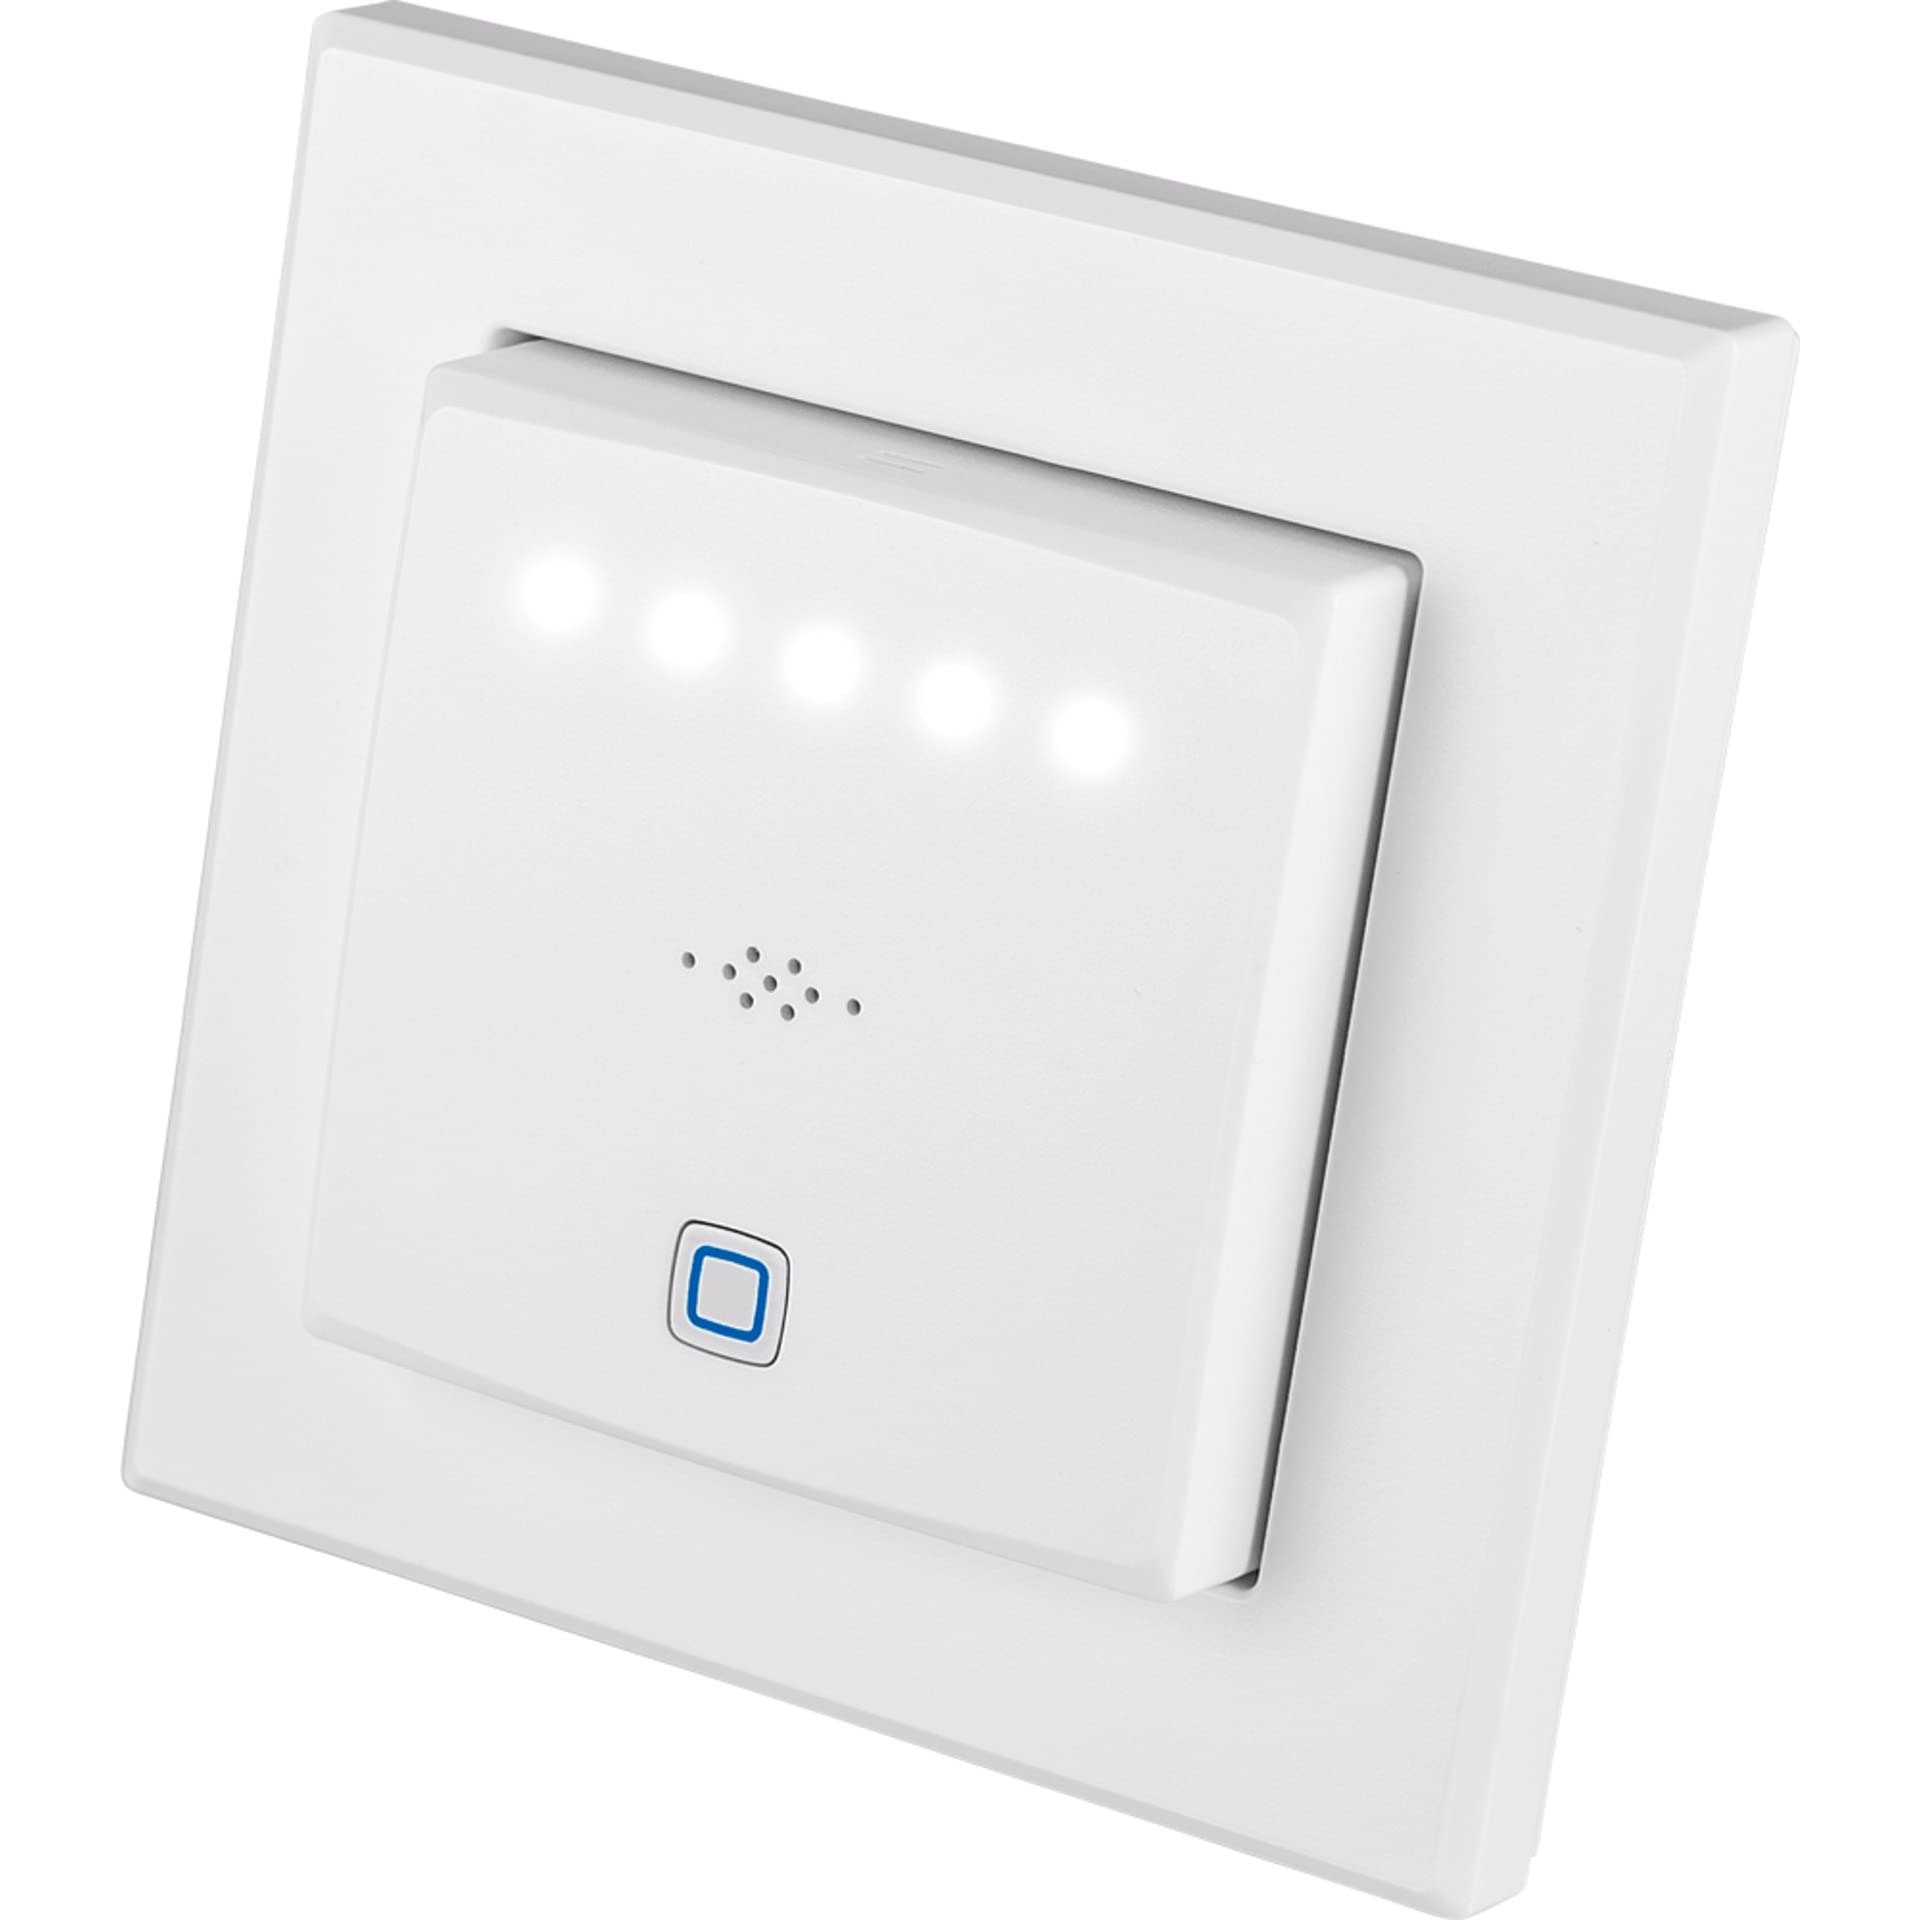 Homematic IP Smart Home CO2-Sensor, Luftgütesensor, Anzeige mit 5 LEDs und in der Smartphone-App, Kohlendioxid Ampel für Luftqualität, Messgerät, 230V, 155592A0